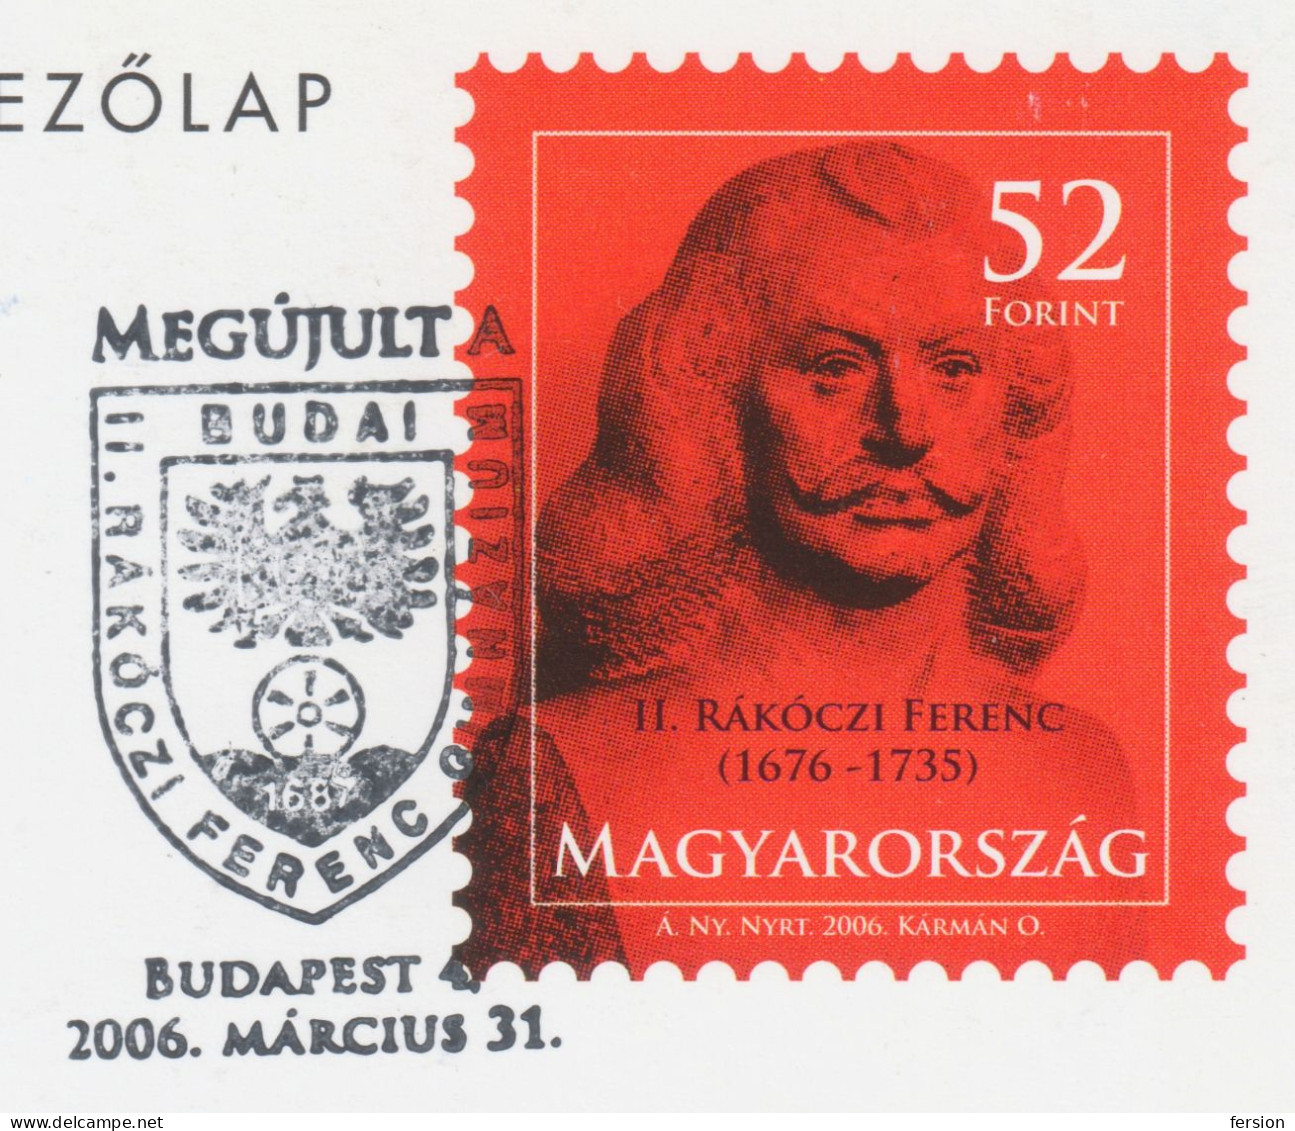 II Rákóczi Ferenc Gymnasium School BUDAPEST Buda 2002 - HUNGARY - Coat Of Arms - STATIONERY POSTCARD - FDC Postmark - Postal Stationery